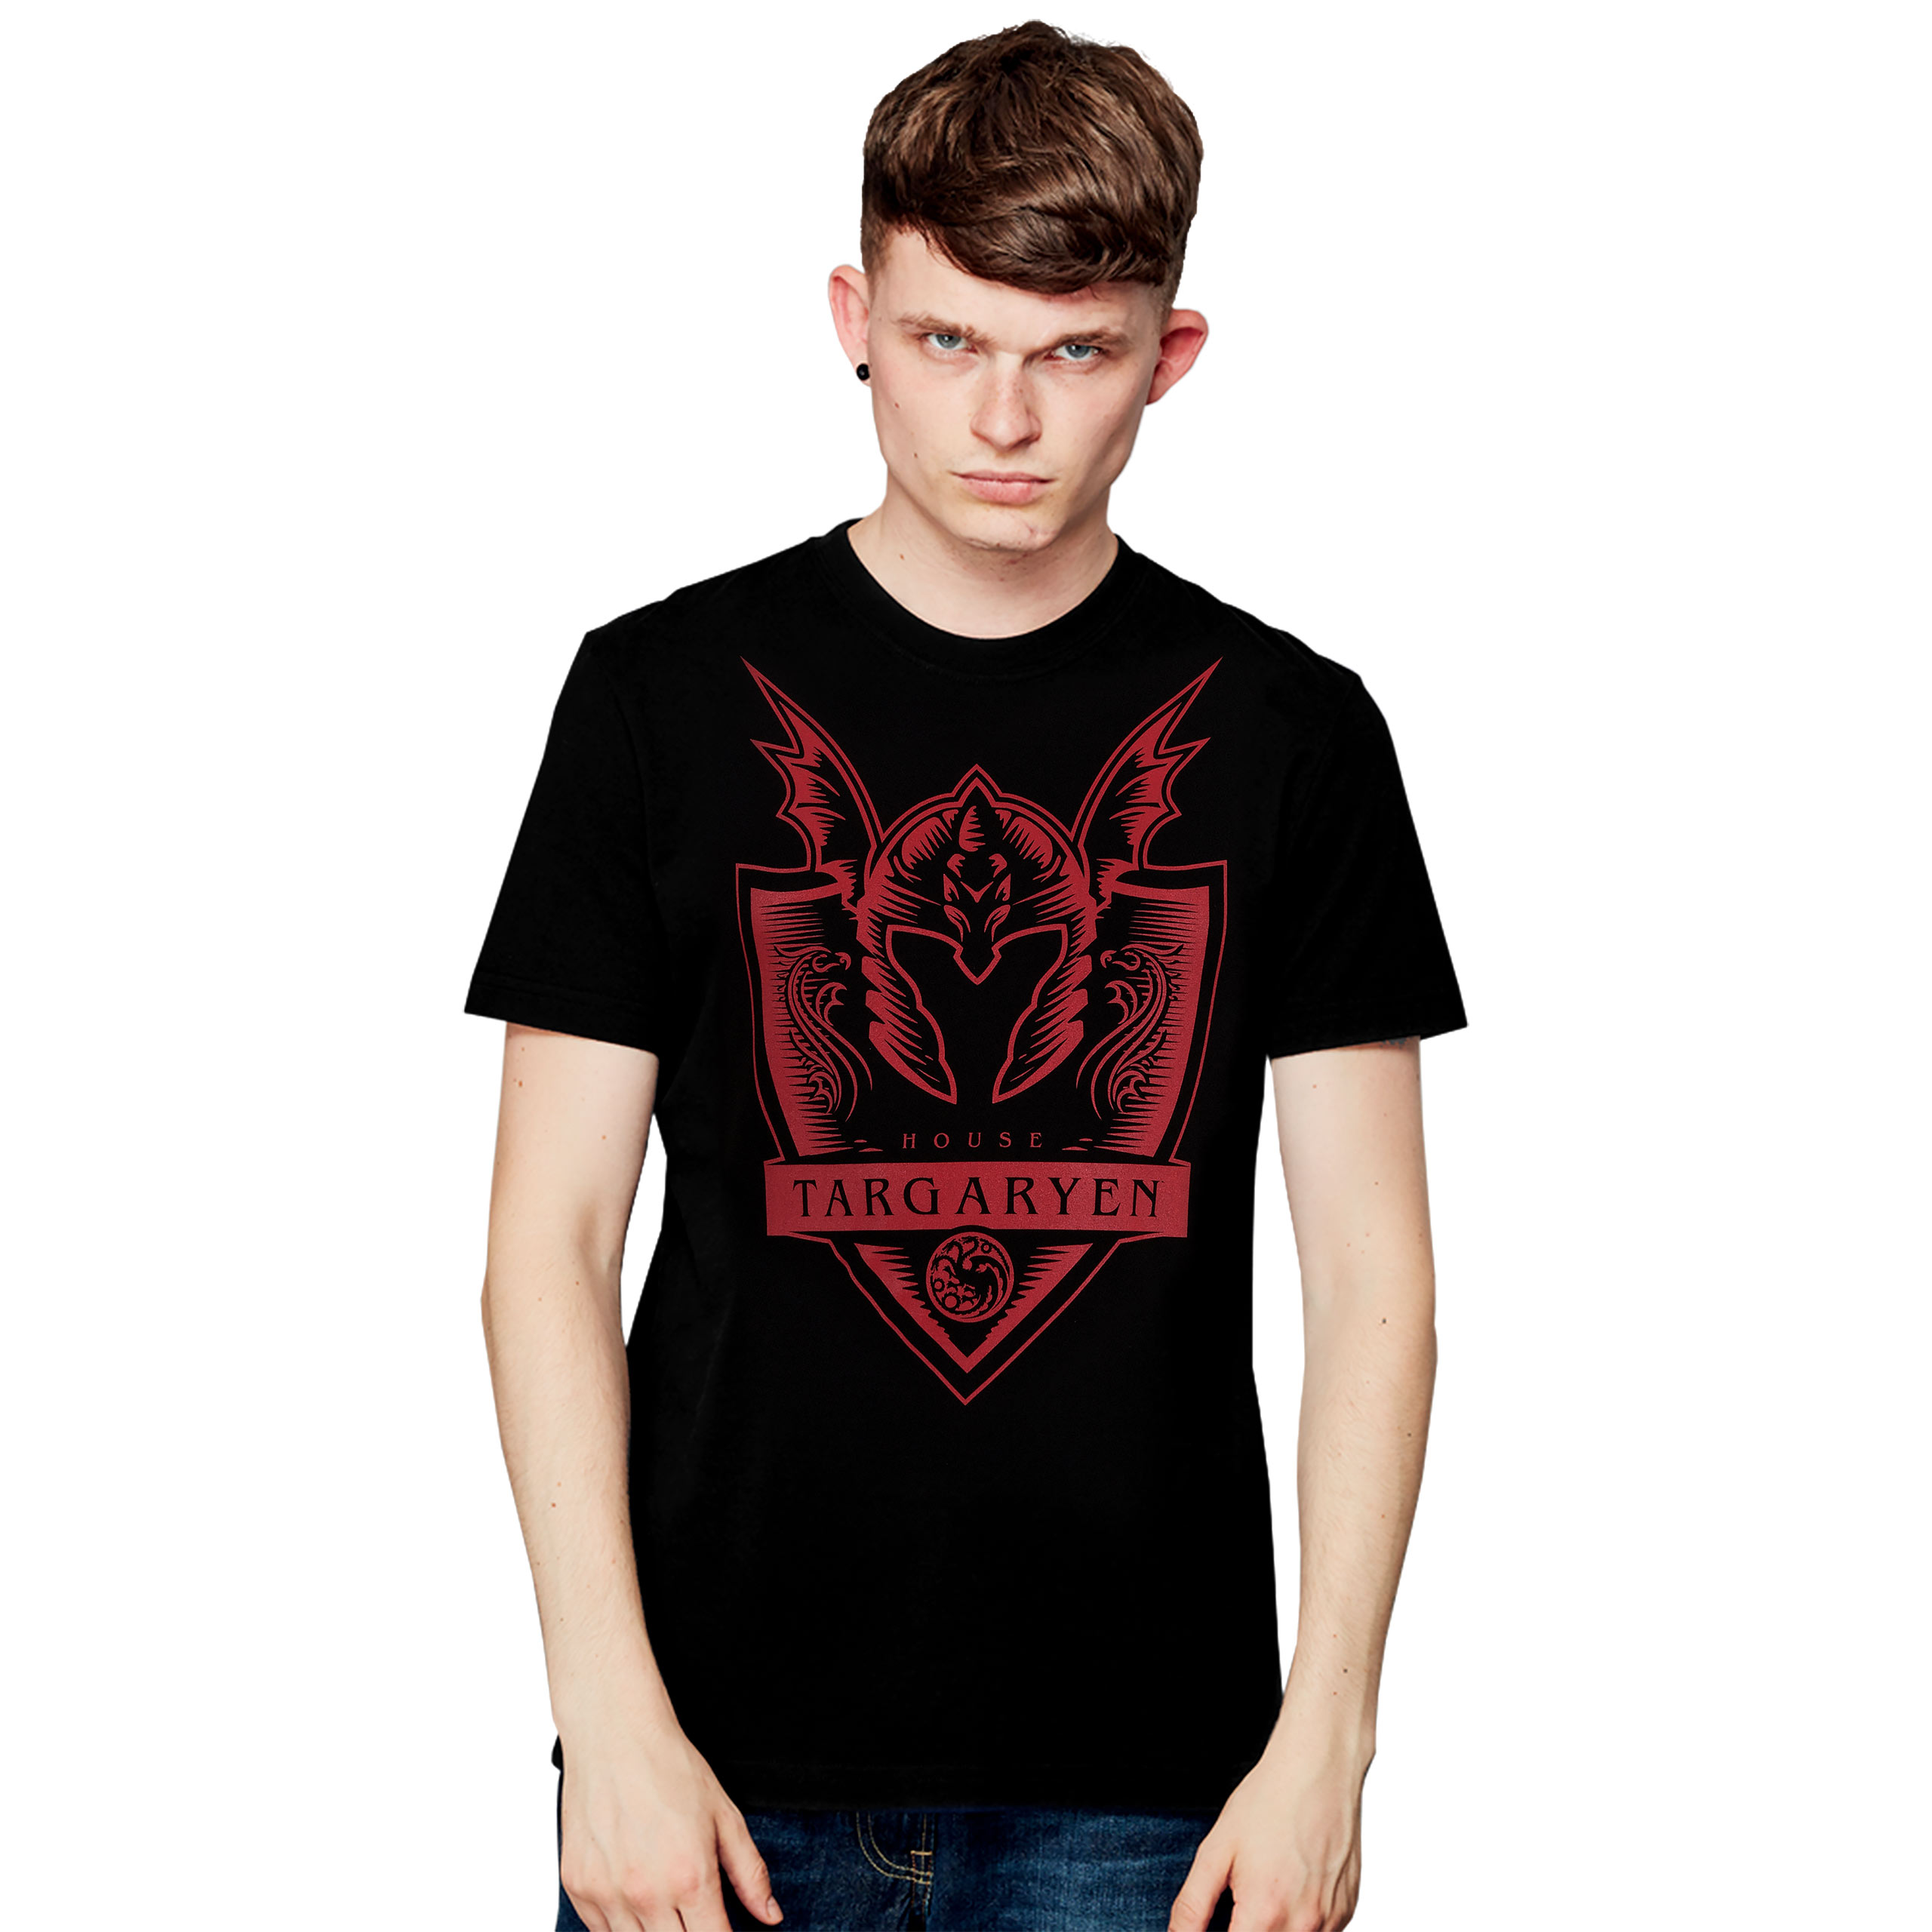 Targaryen T-Shirt black - House of the Dragon